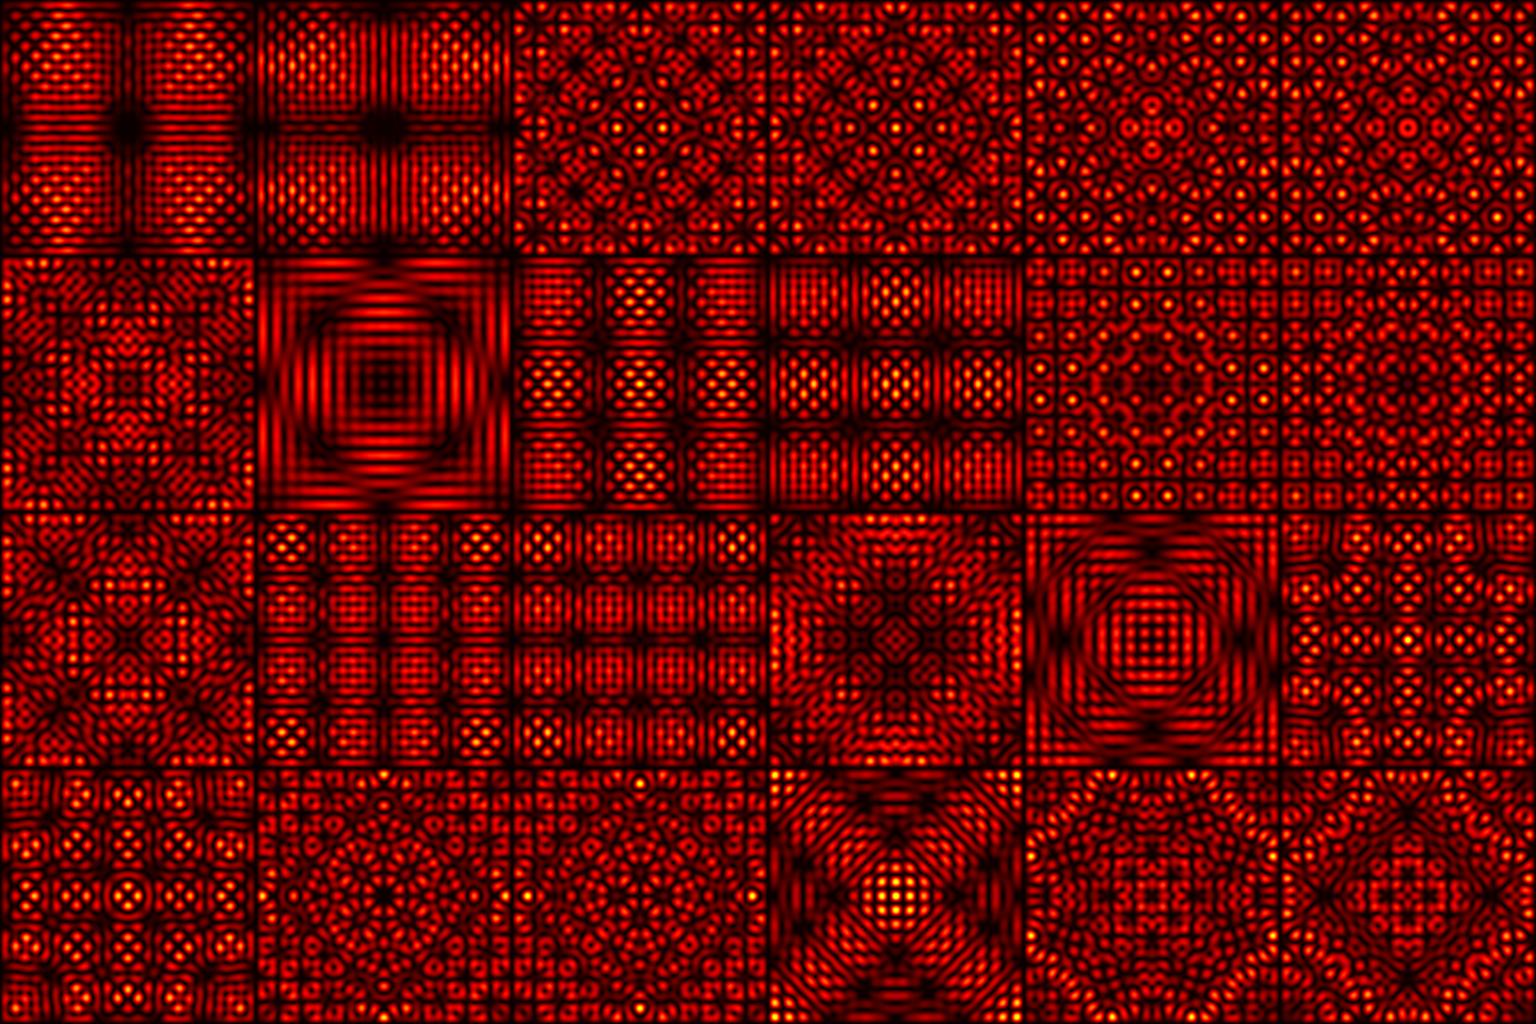 Image for entry 'Quantum Carpet'